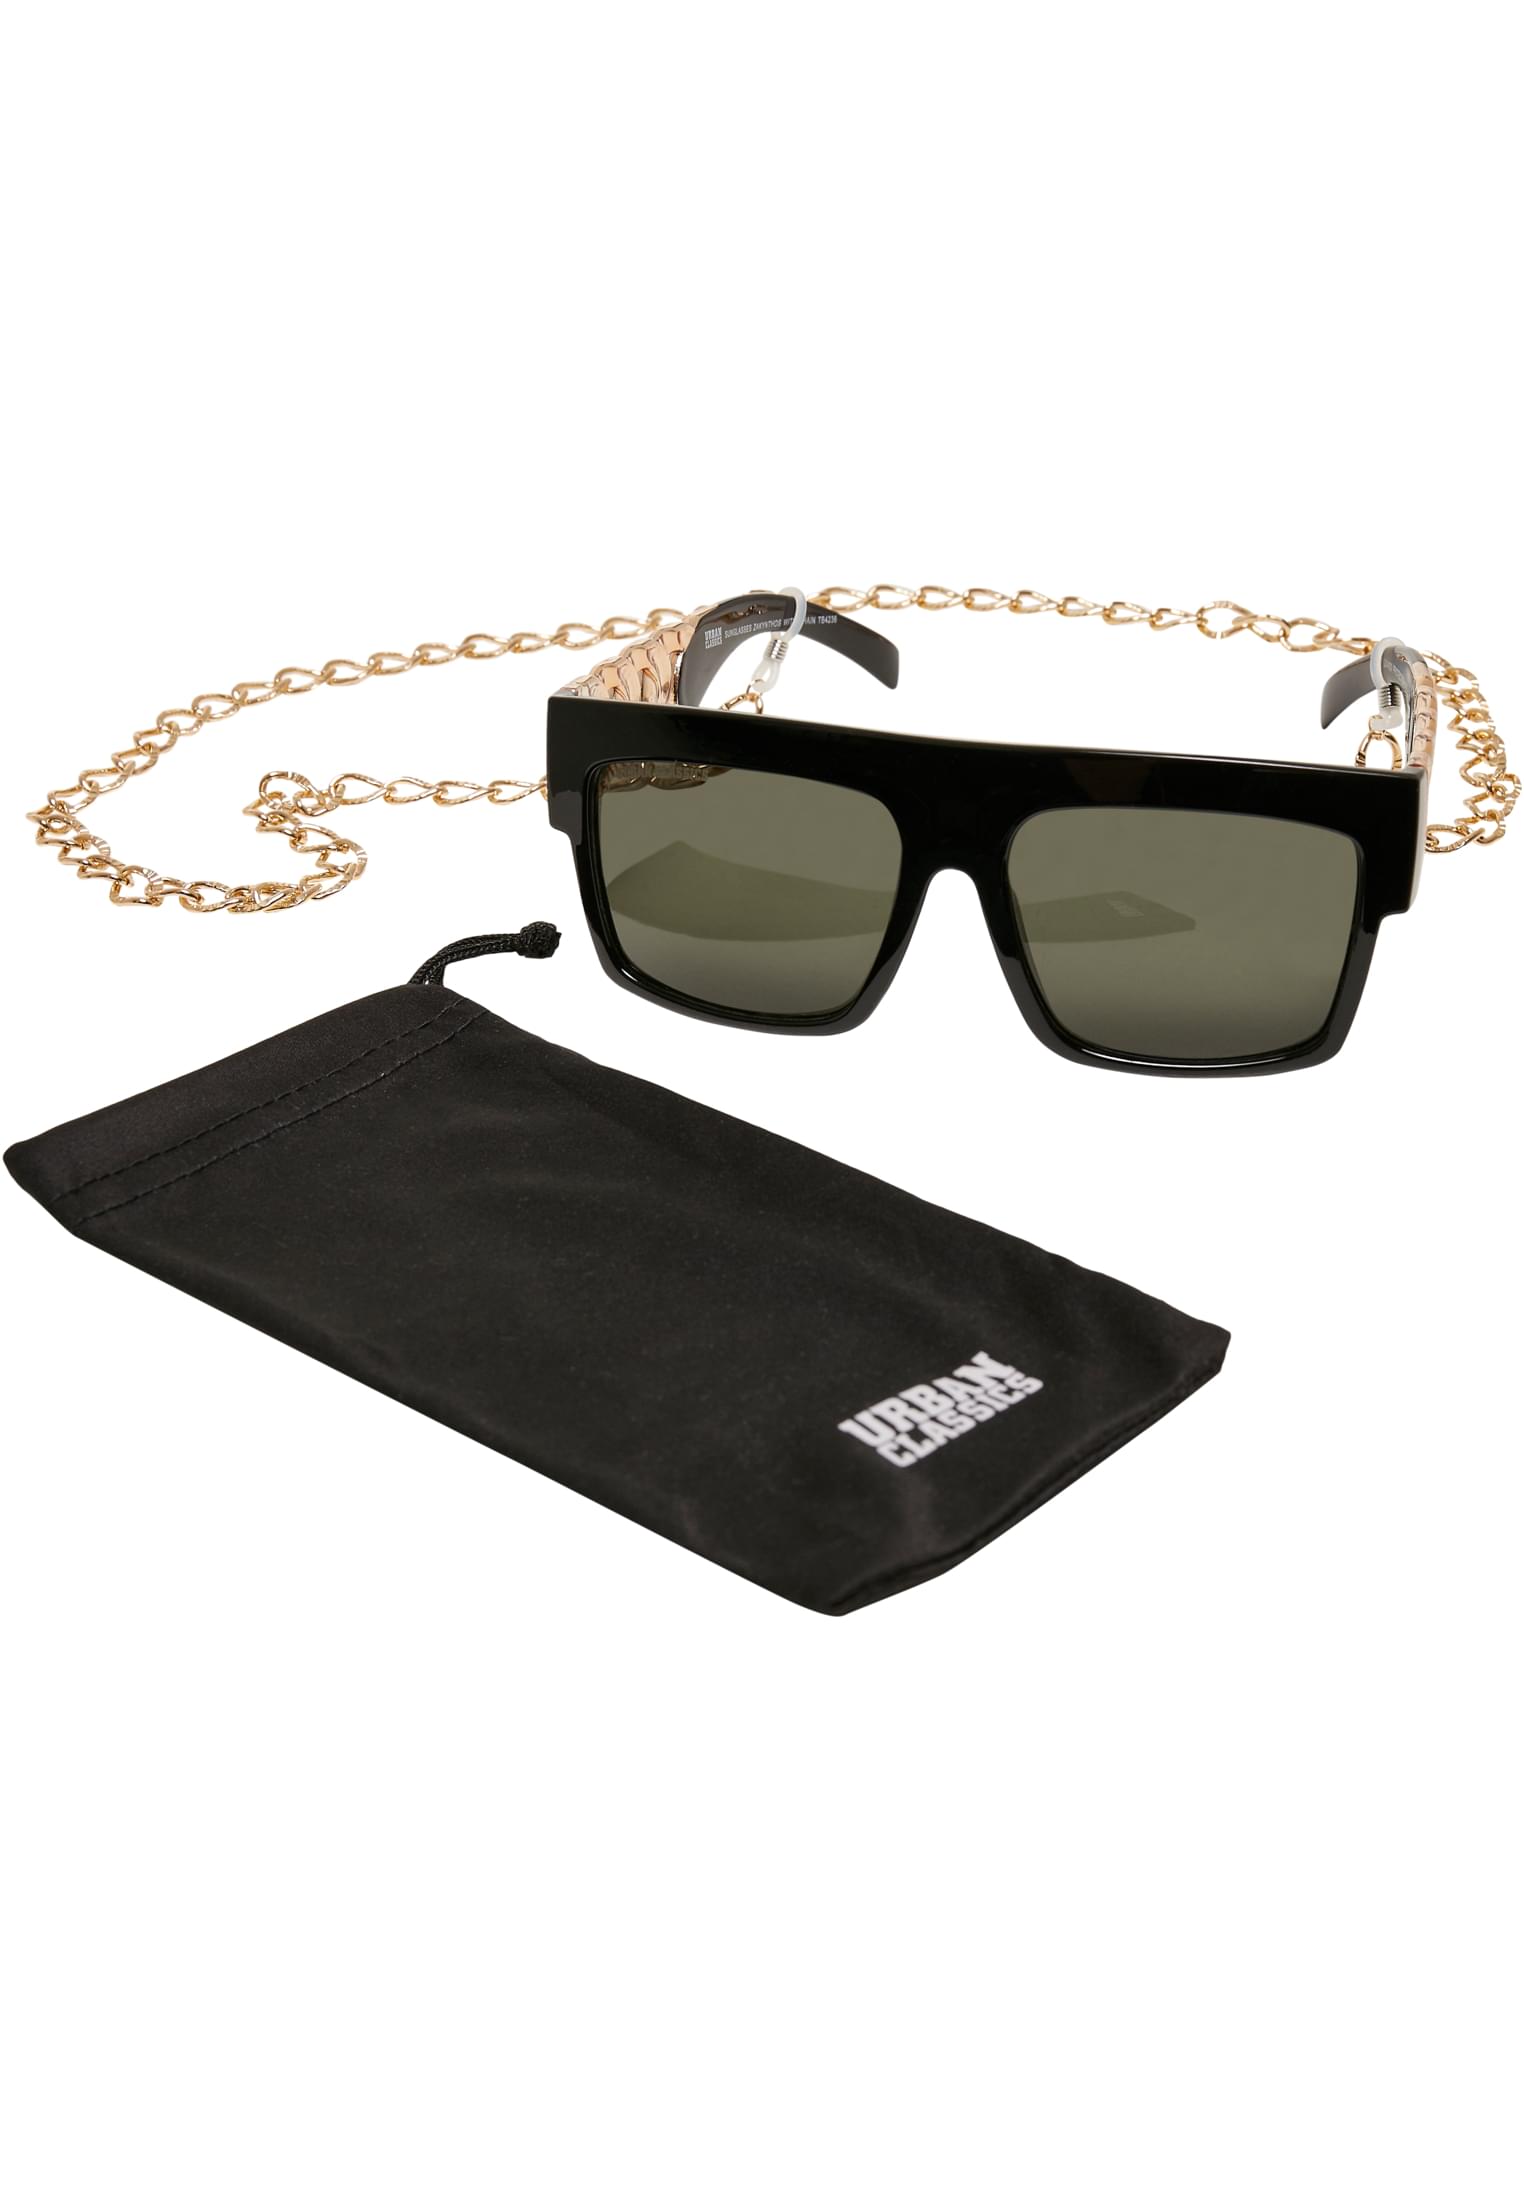 Zakynthos sunglasses with chain black/gold